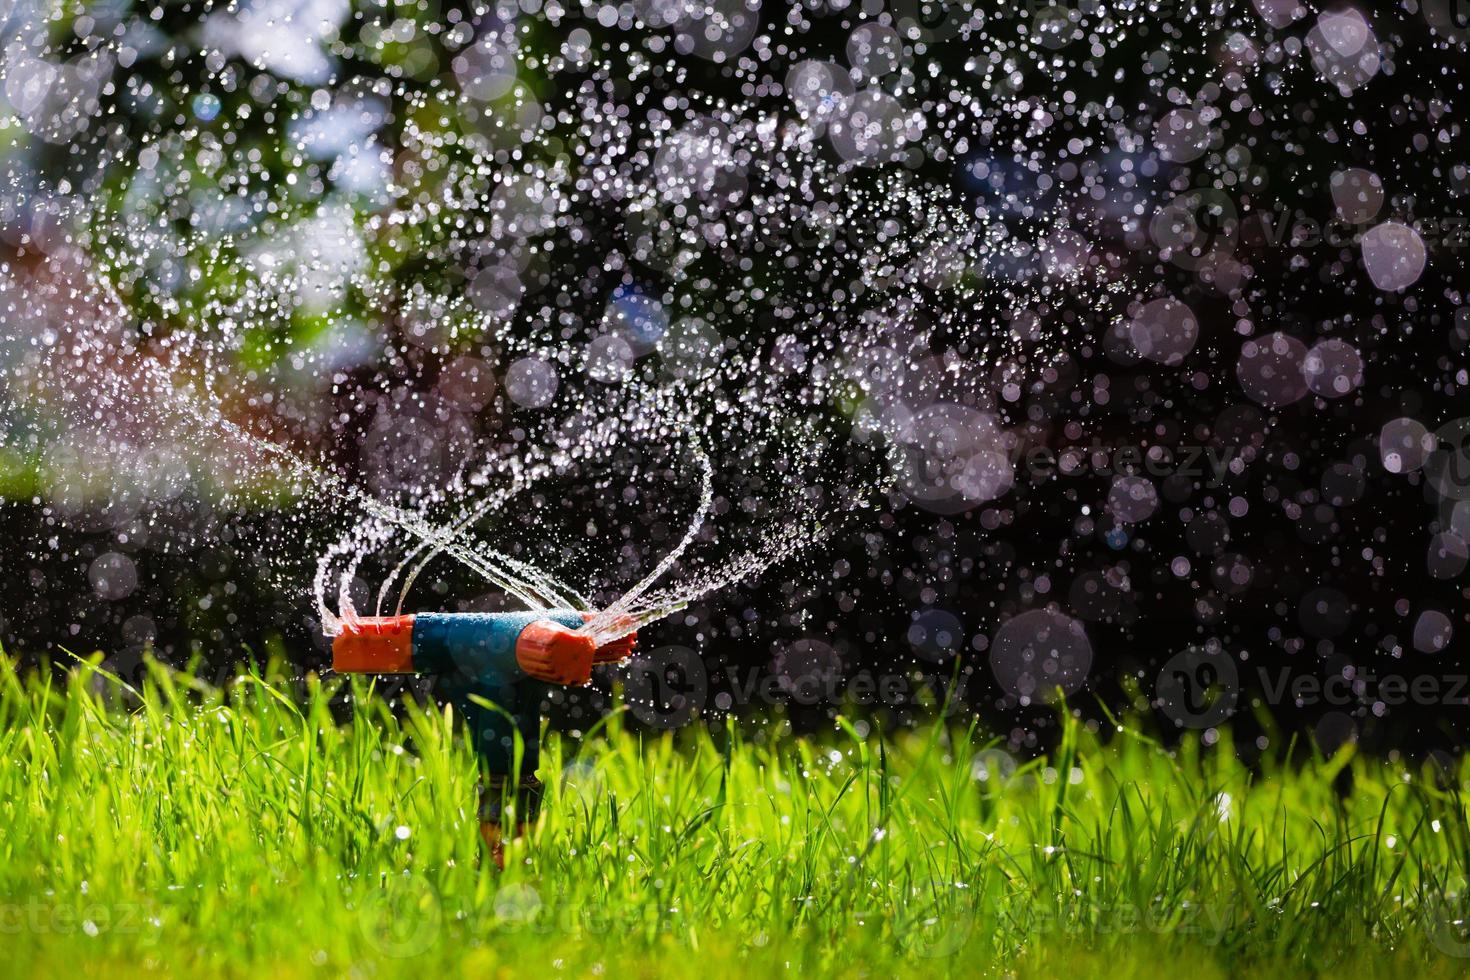 Rotating garden sprinkler watering grass photo